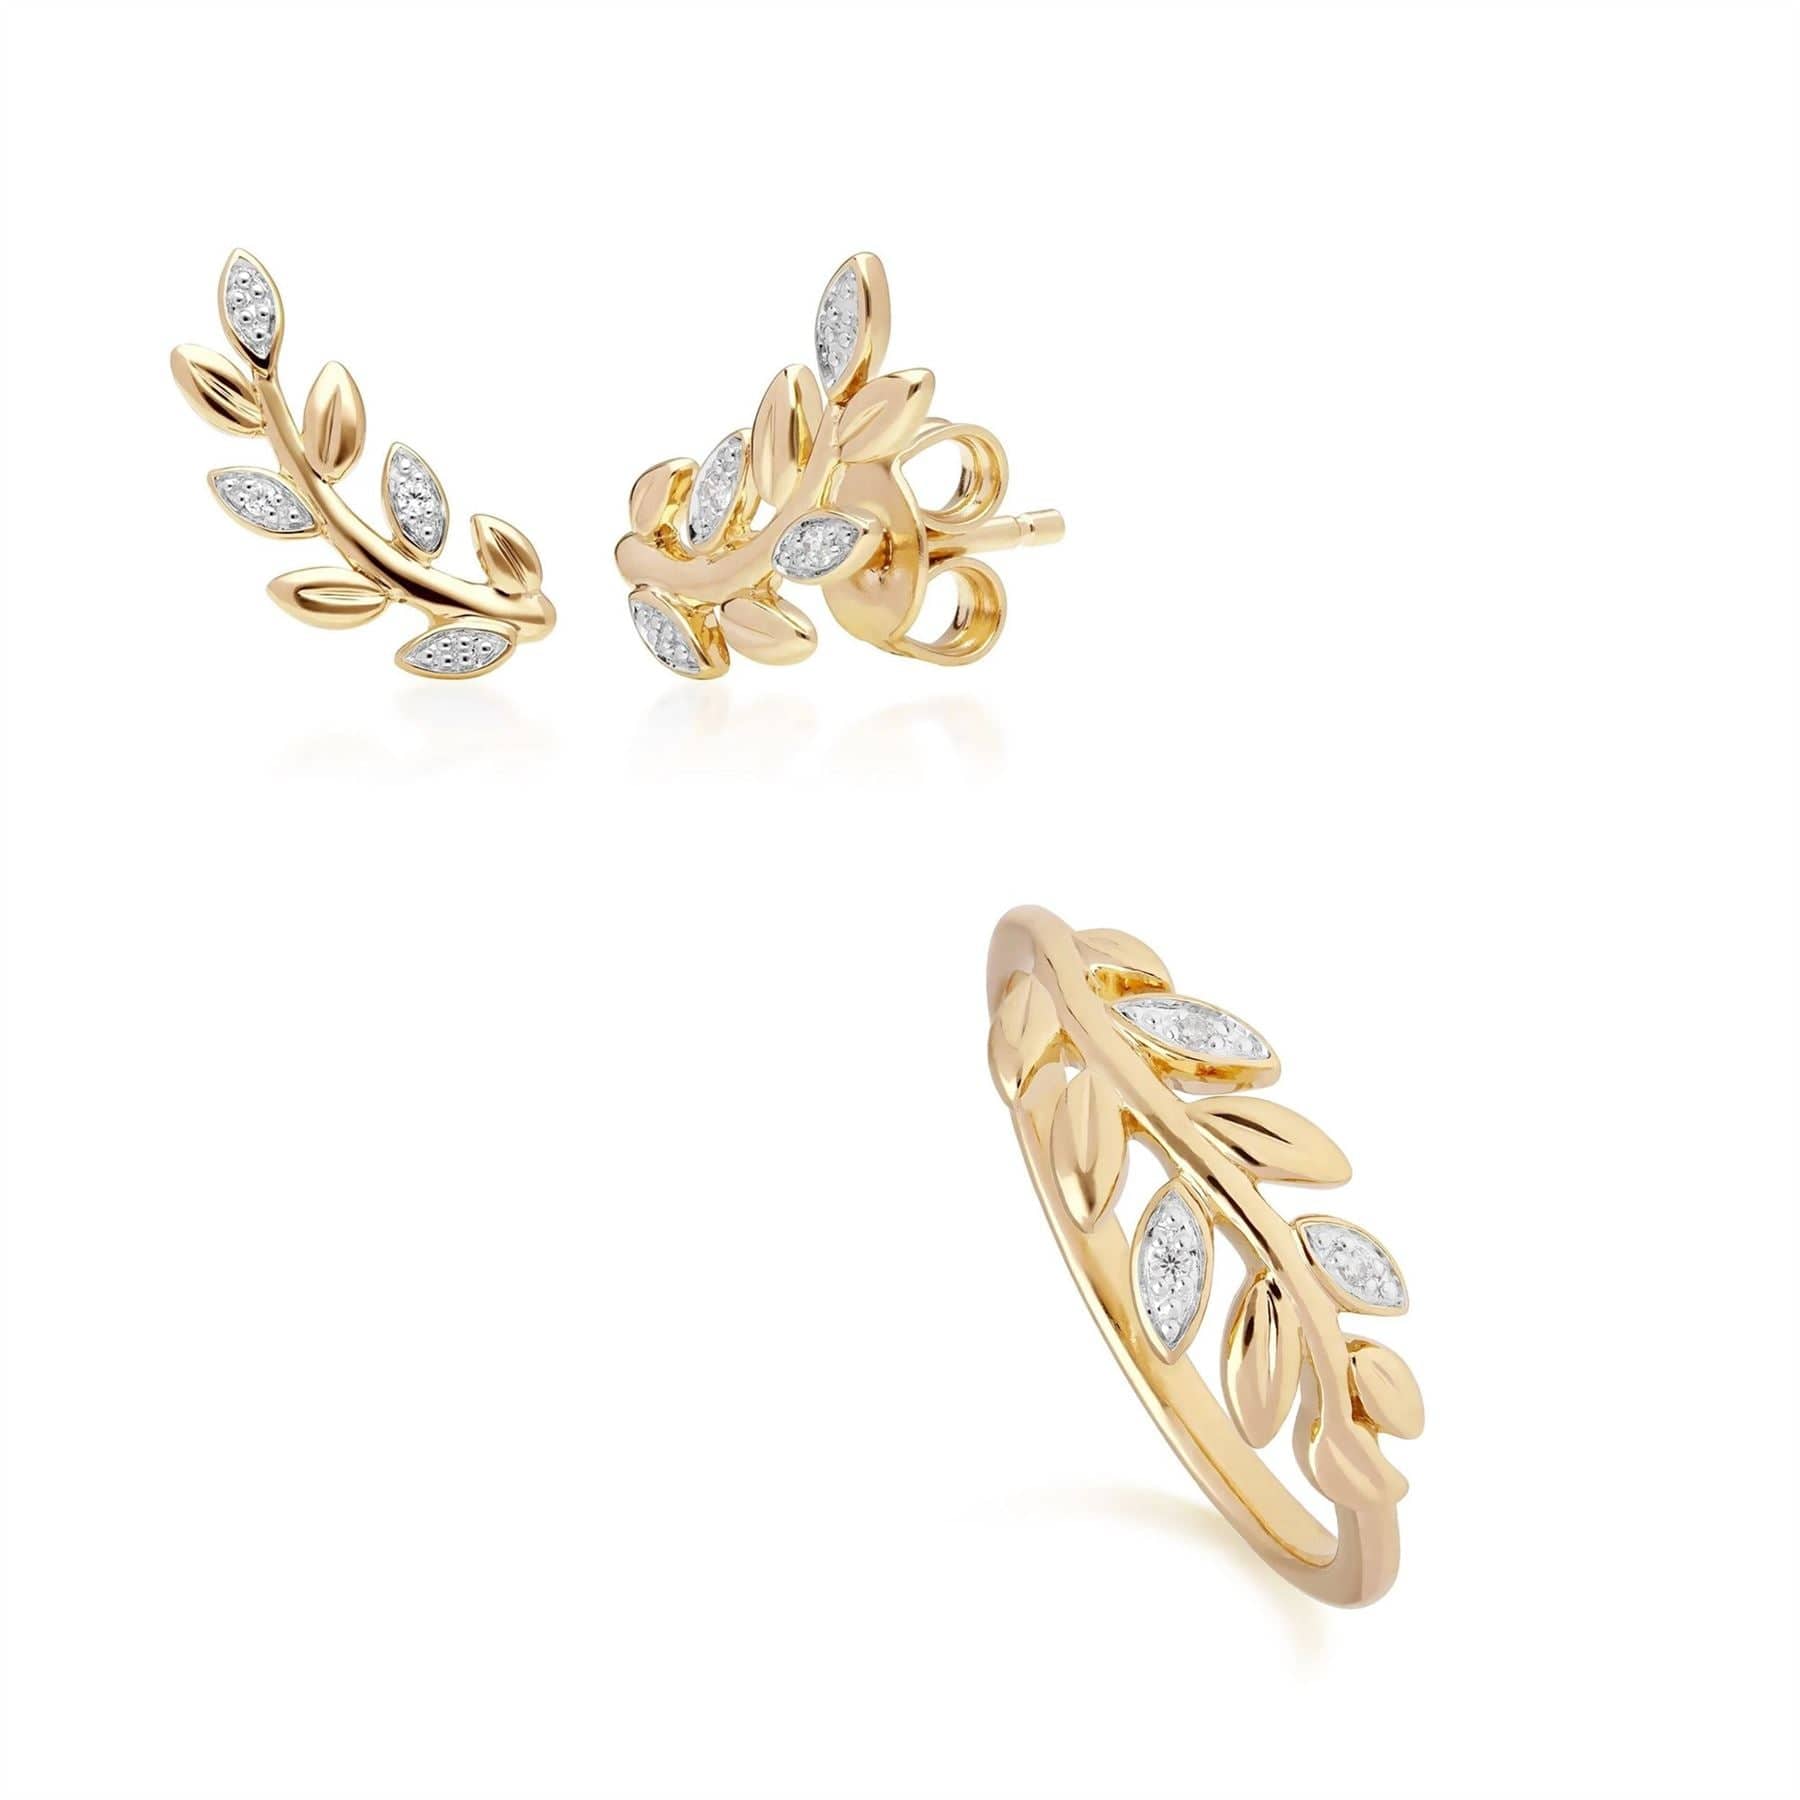 191E0403019-191R0911019 O Leaf Diamond Stud Earring & Ring Set in 9ct Yellow Gold 1